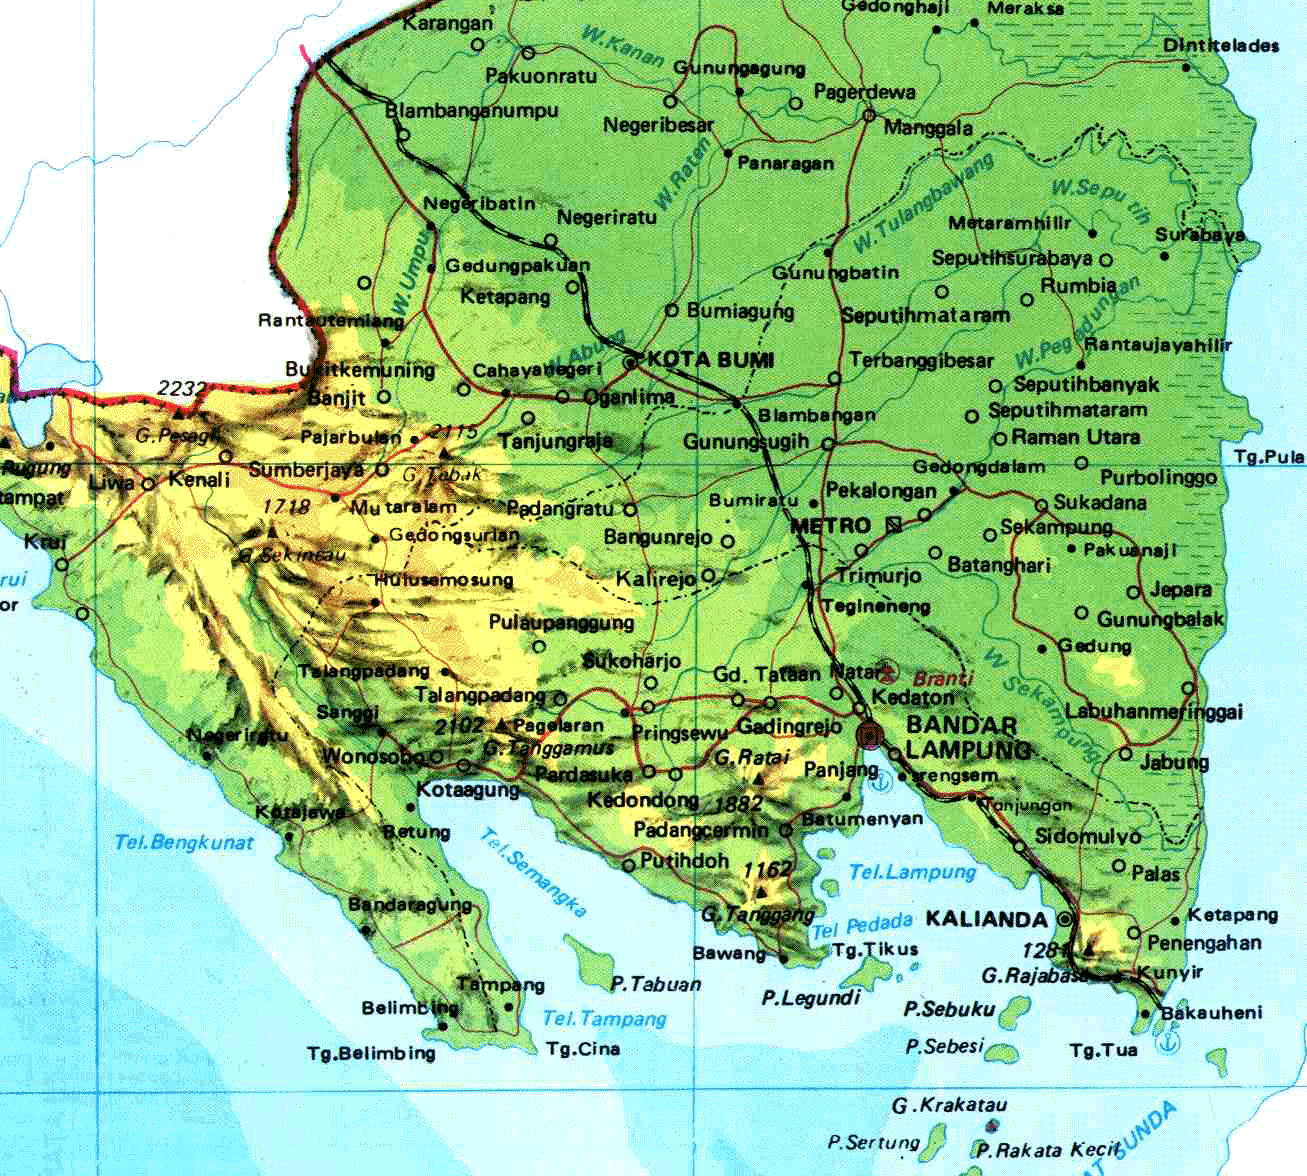 Bandar Lampung regional map